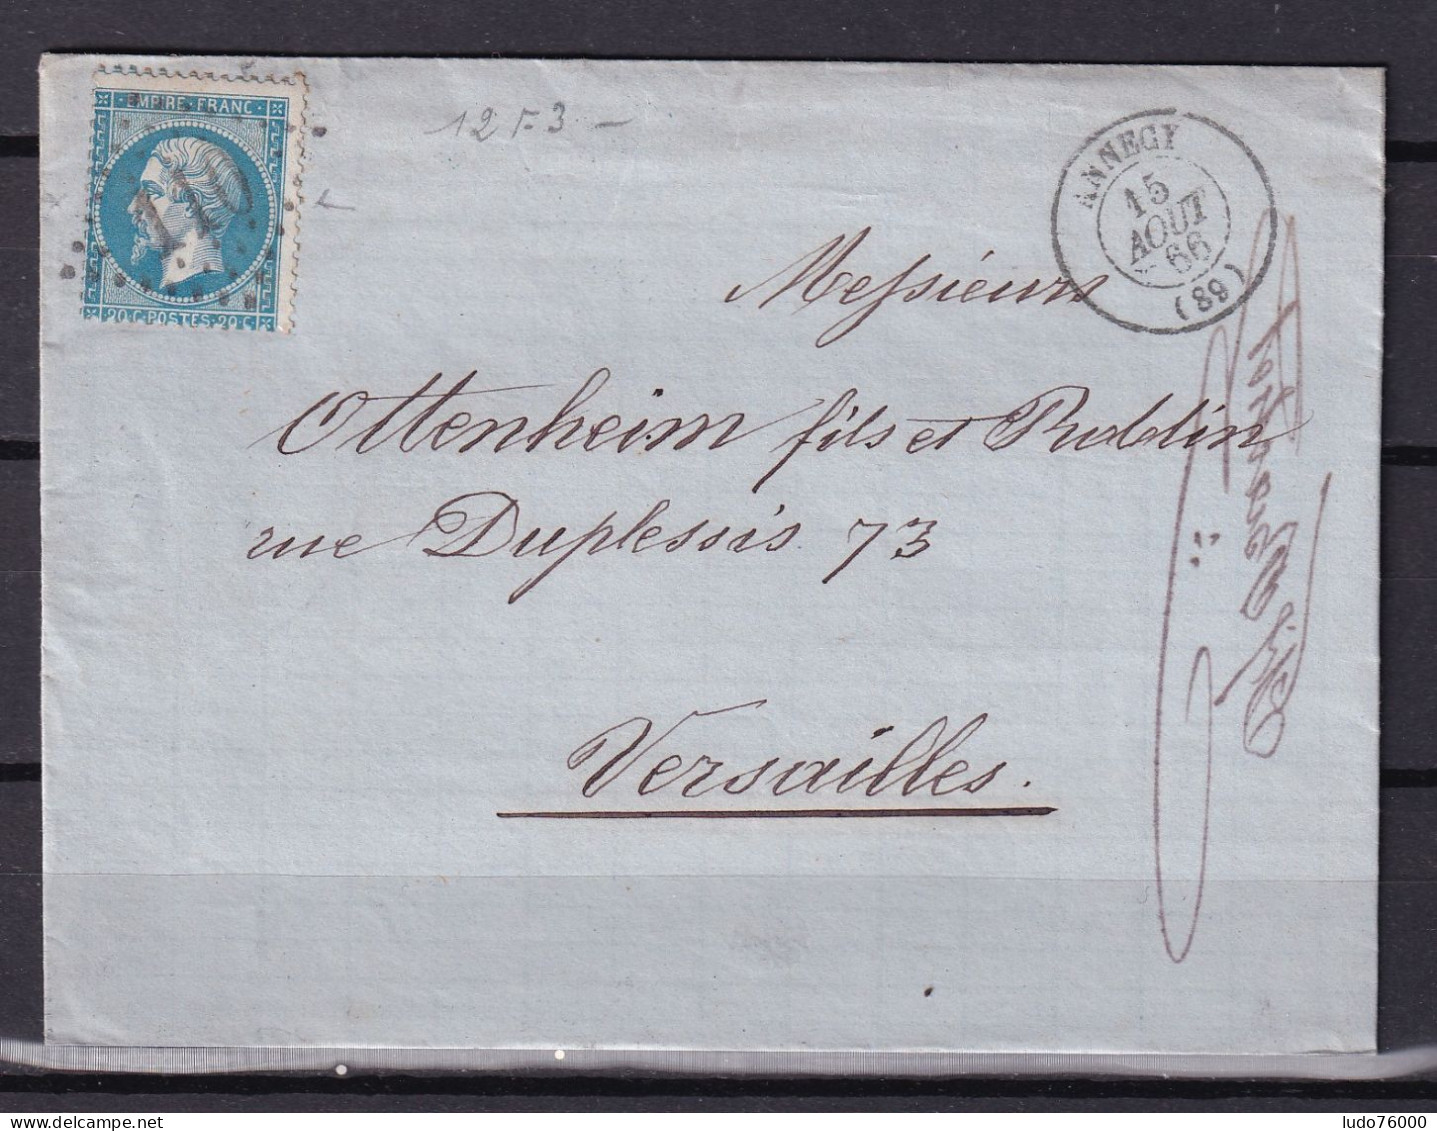 D 807 / NAPOLEON N° 22 SUR LETTRE - 1862 Napoléon III